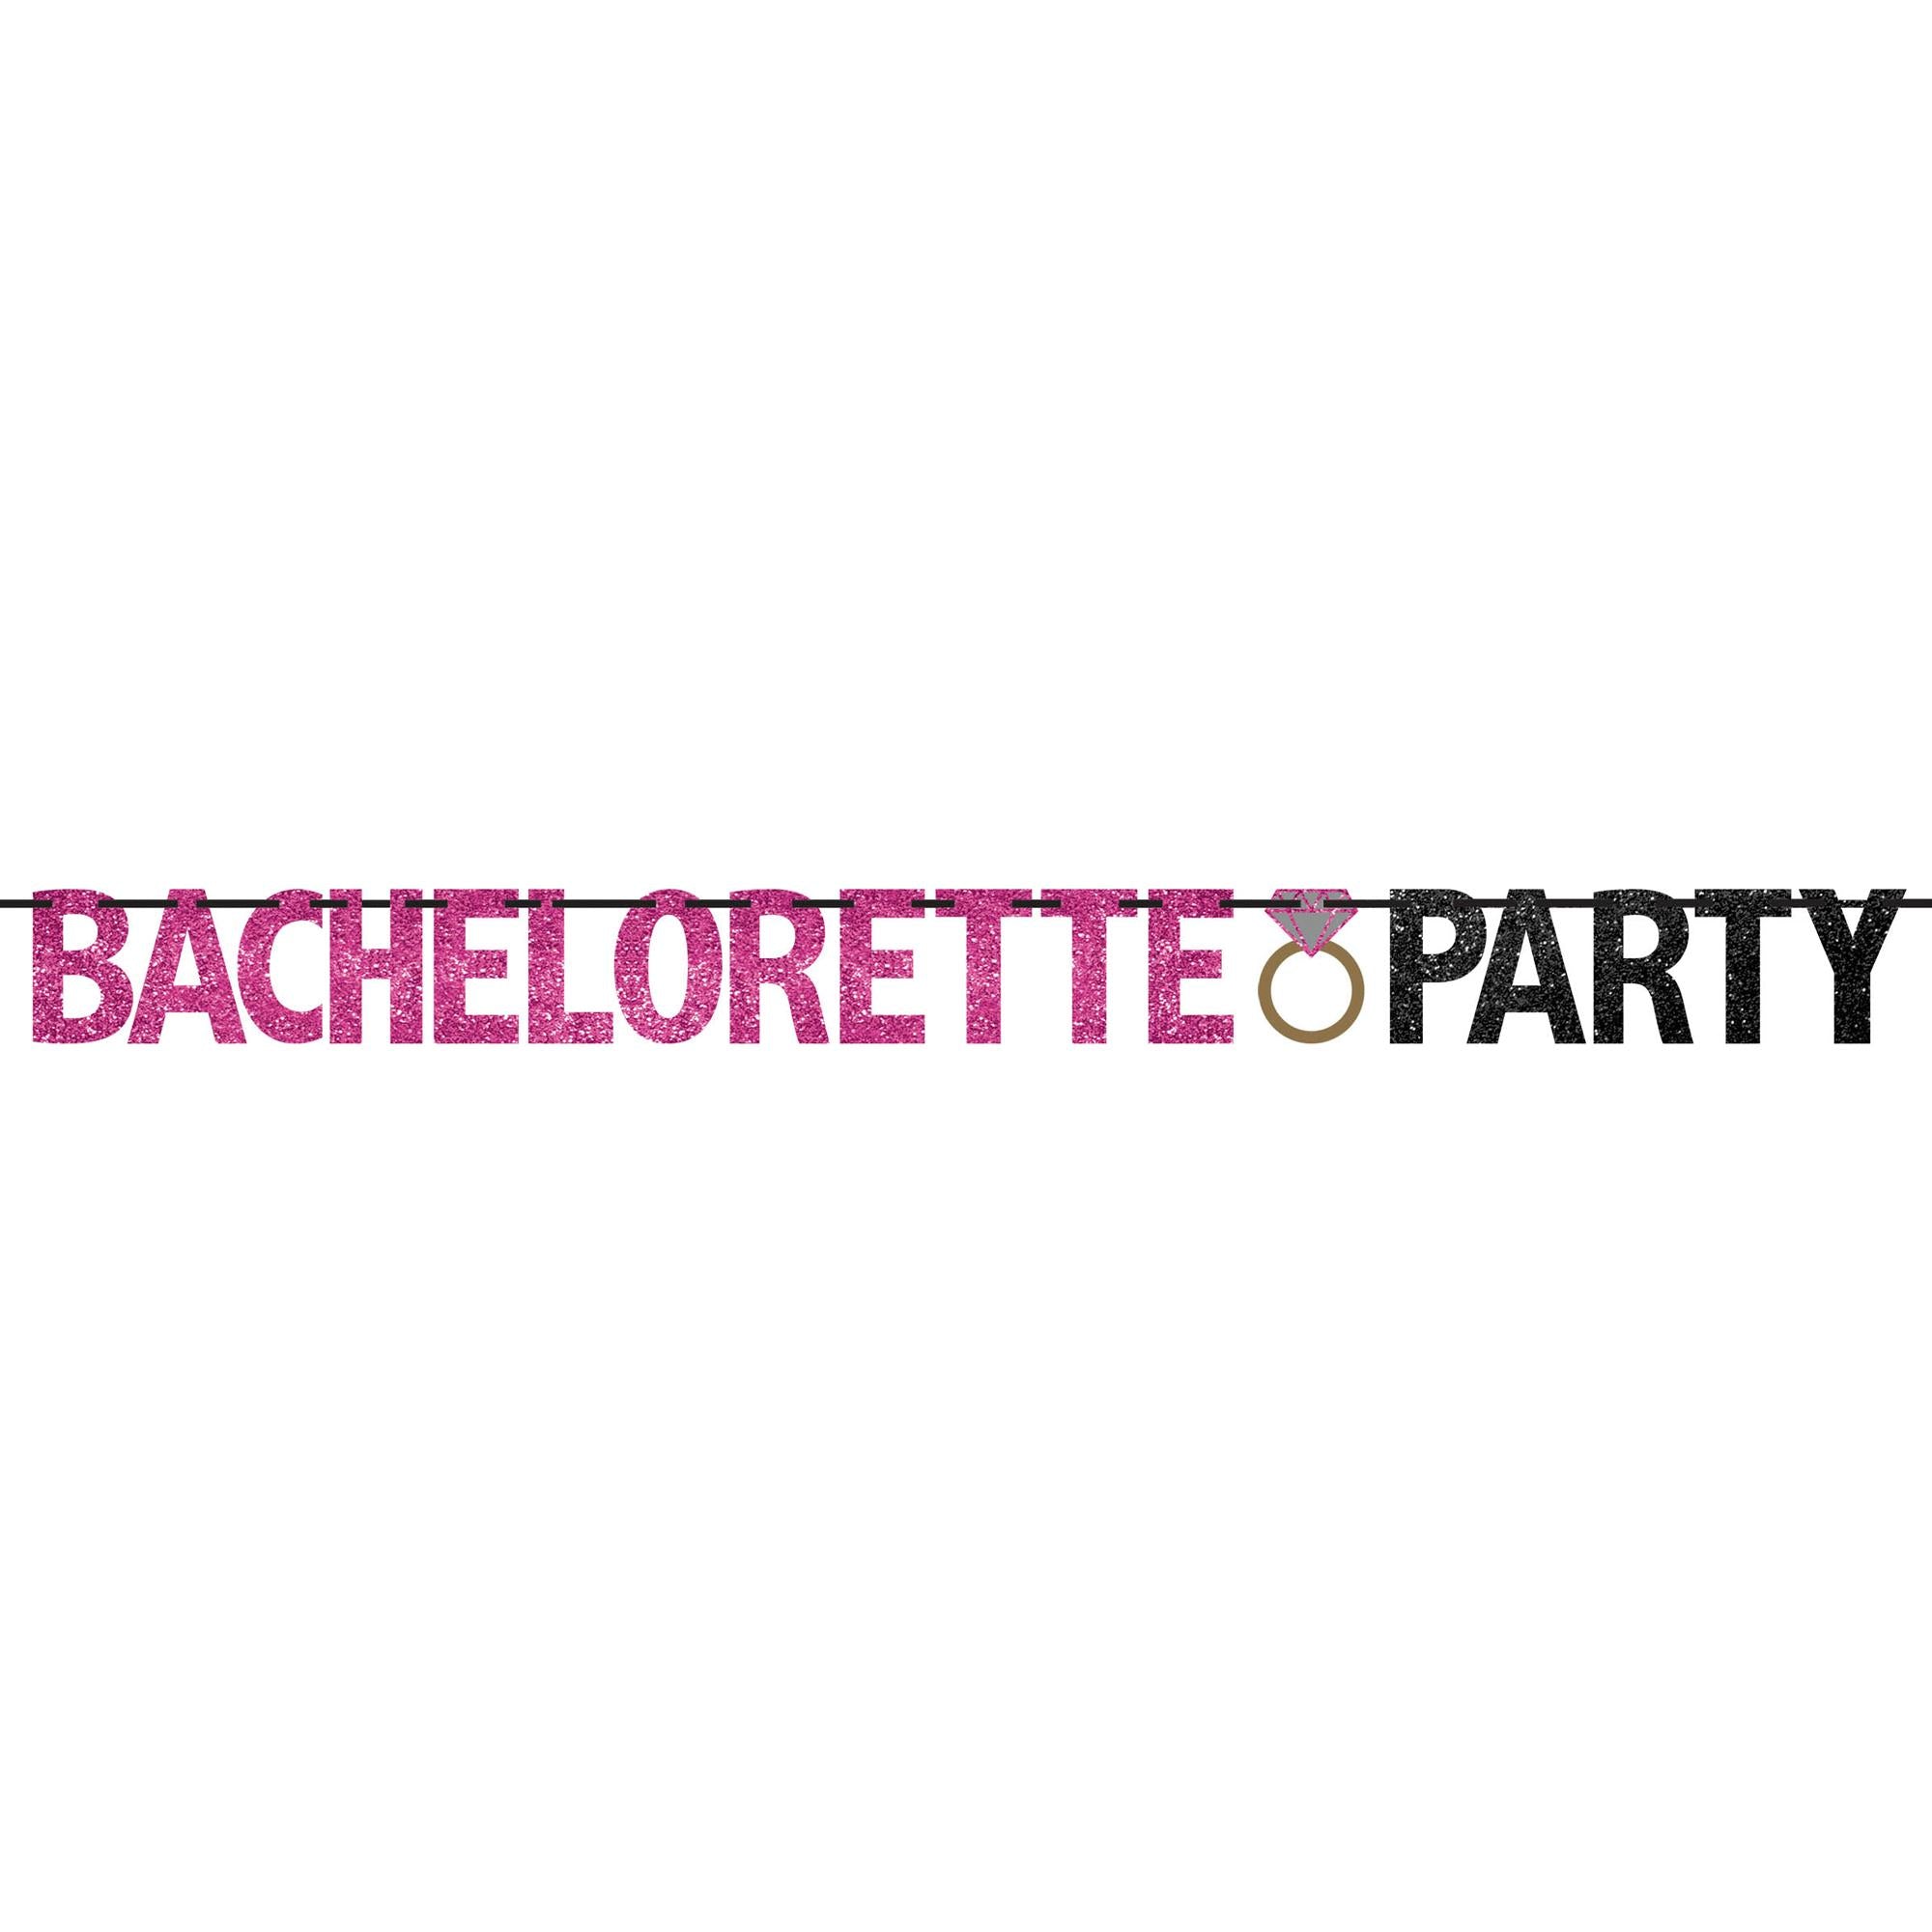 Bachelorette Glitter Party Banner Decorations - Party Centre